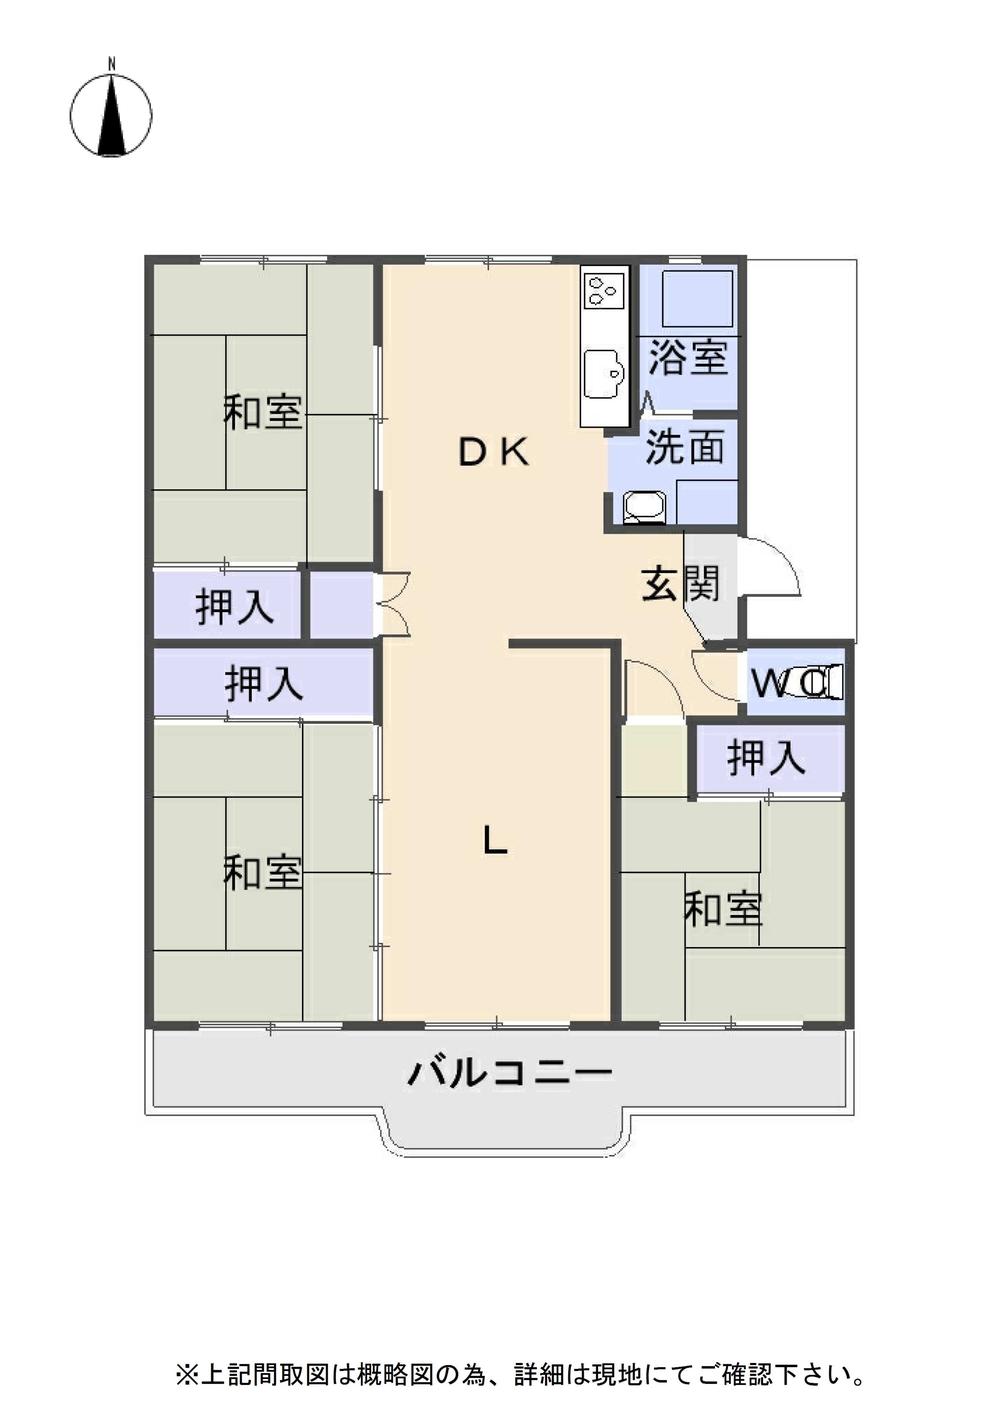 Floor plan. 3LDK, Price 5.4 million yen, Occupied area 67.36 sq m , Balcony area 8.07 sq m